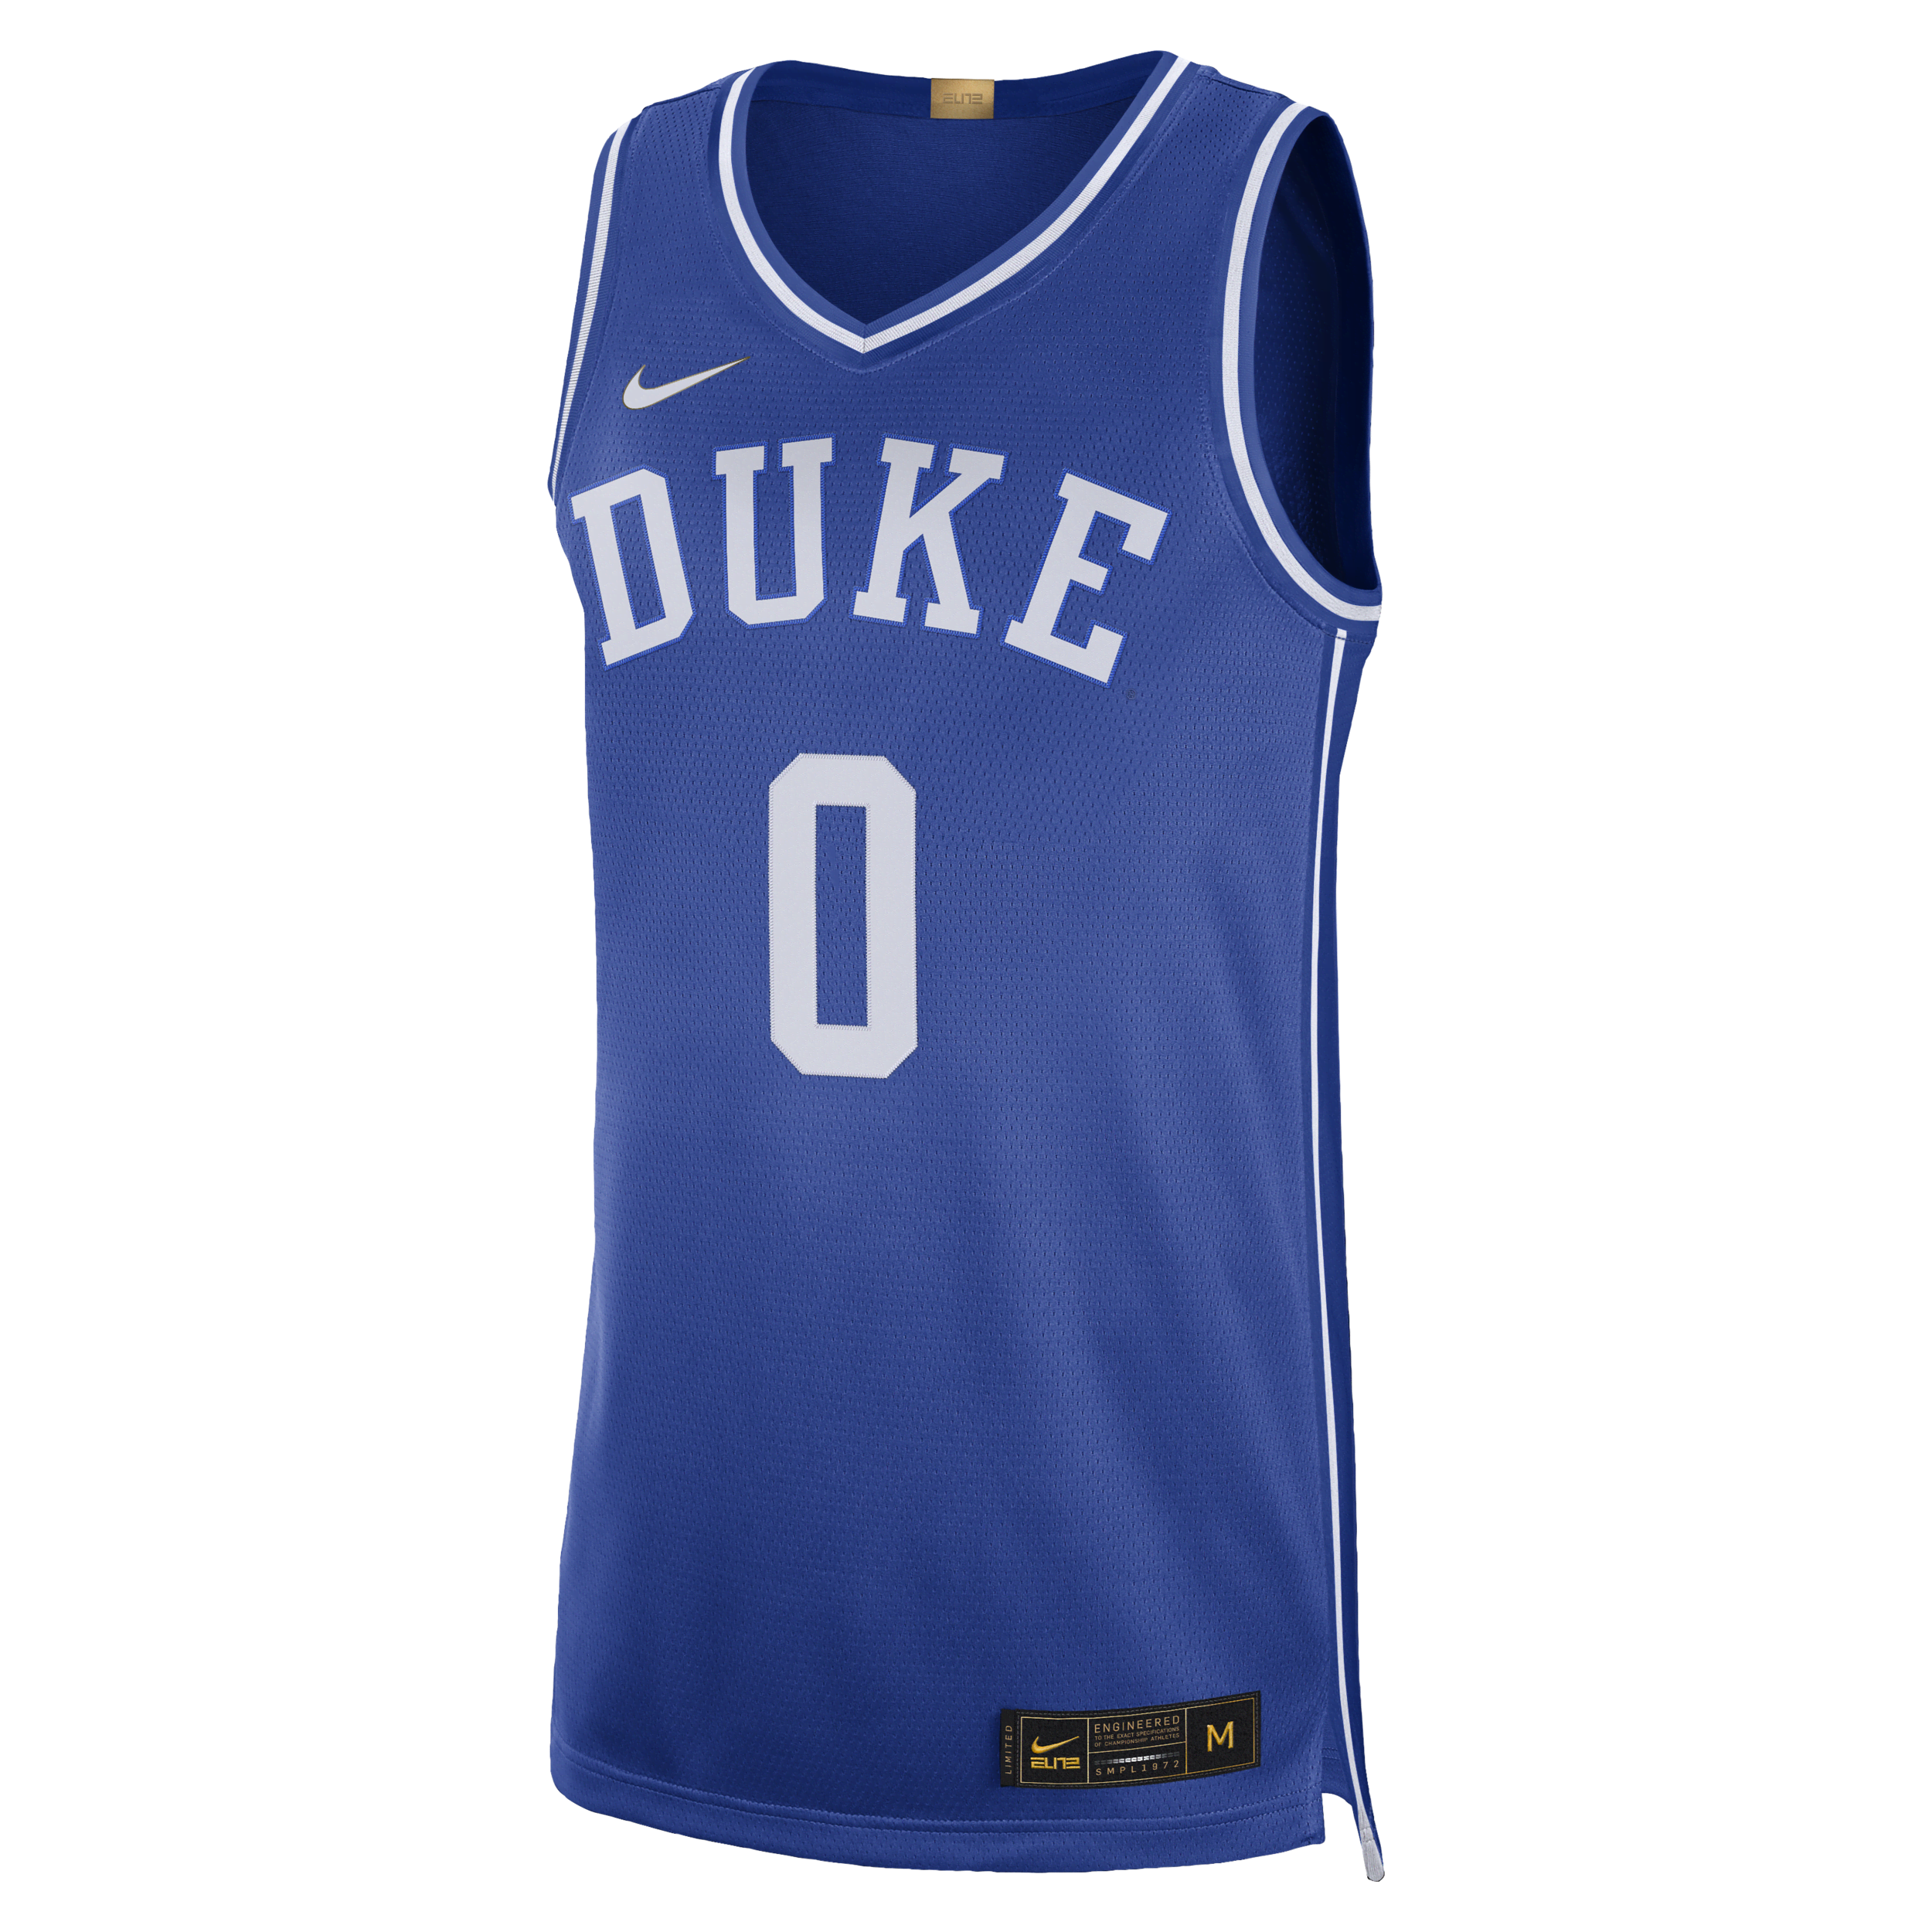 Duke Limited Camiseta de baloncesto Nike Dri-FIT College - Hombre - Azul